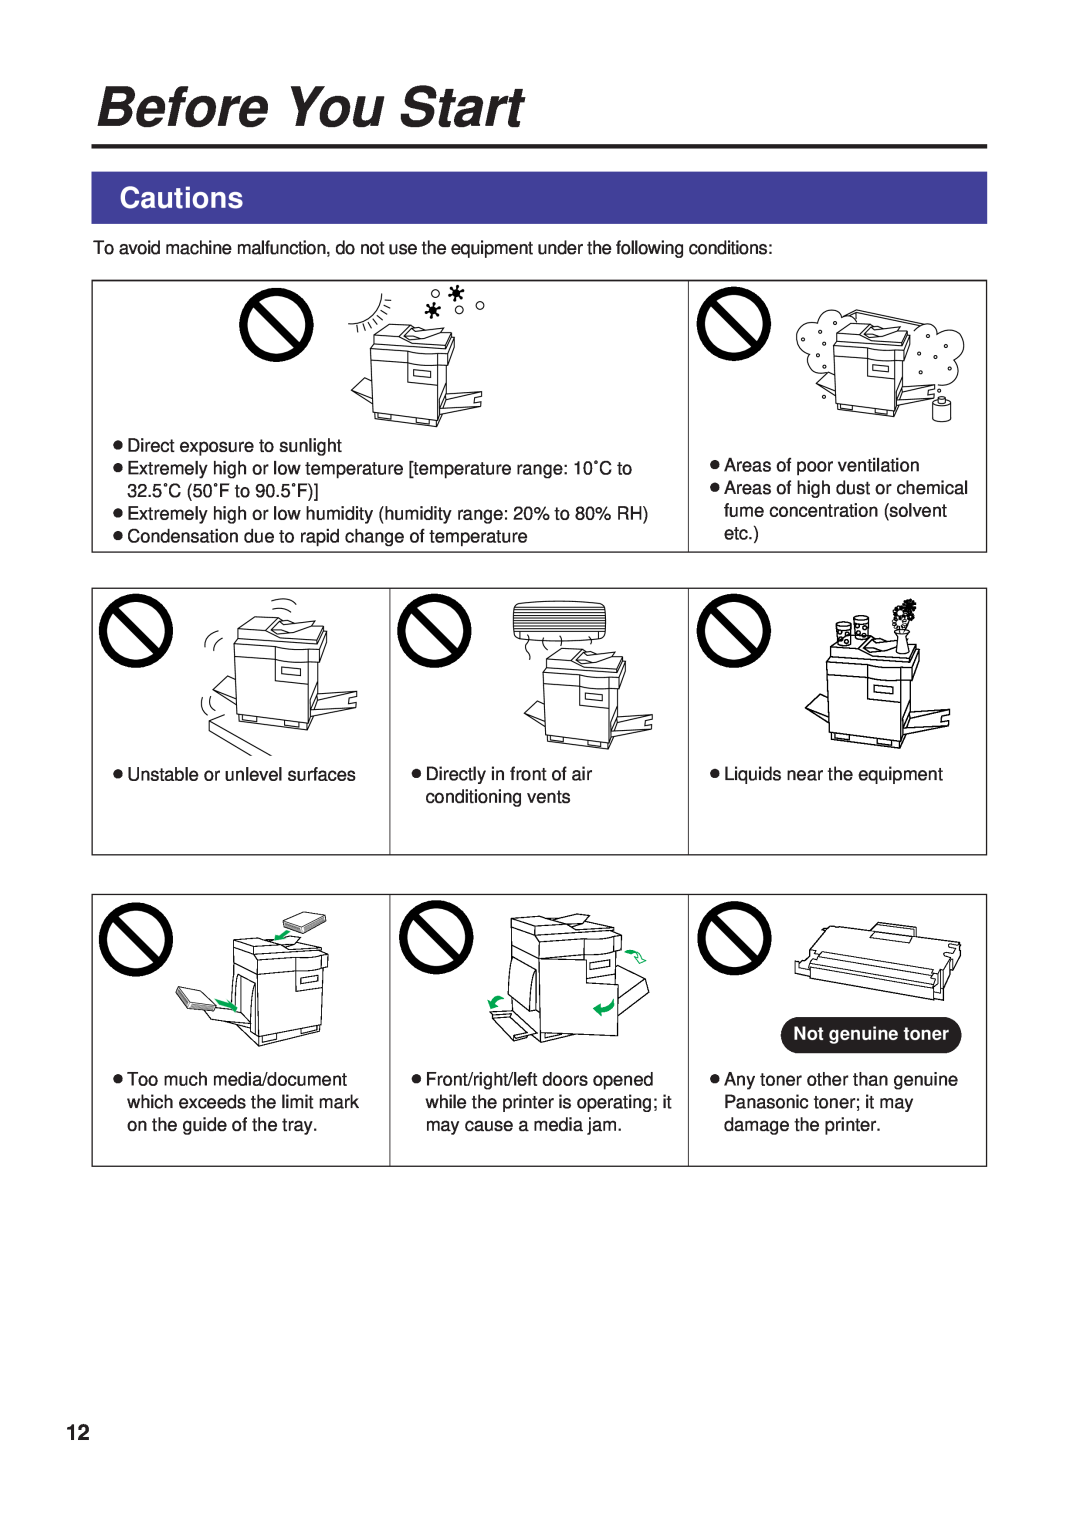 Panasonic KX-PS8000 manual Before You Start, Cautions, Not genuine toner 